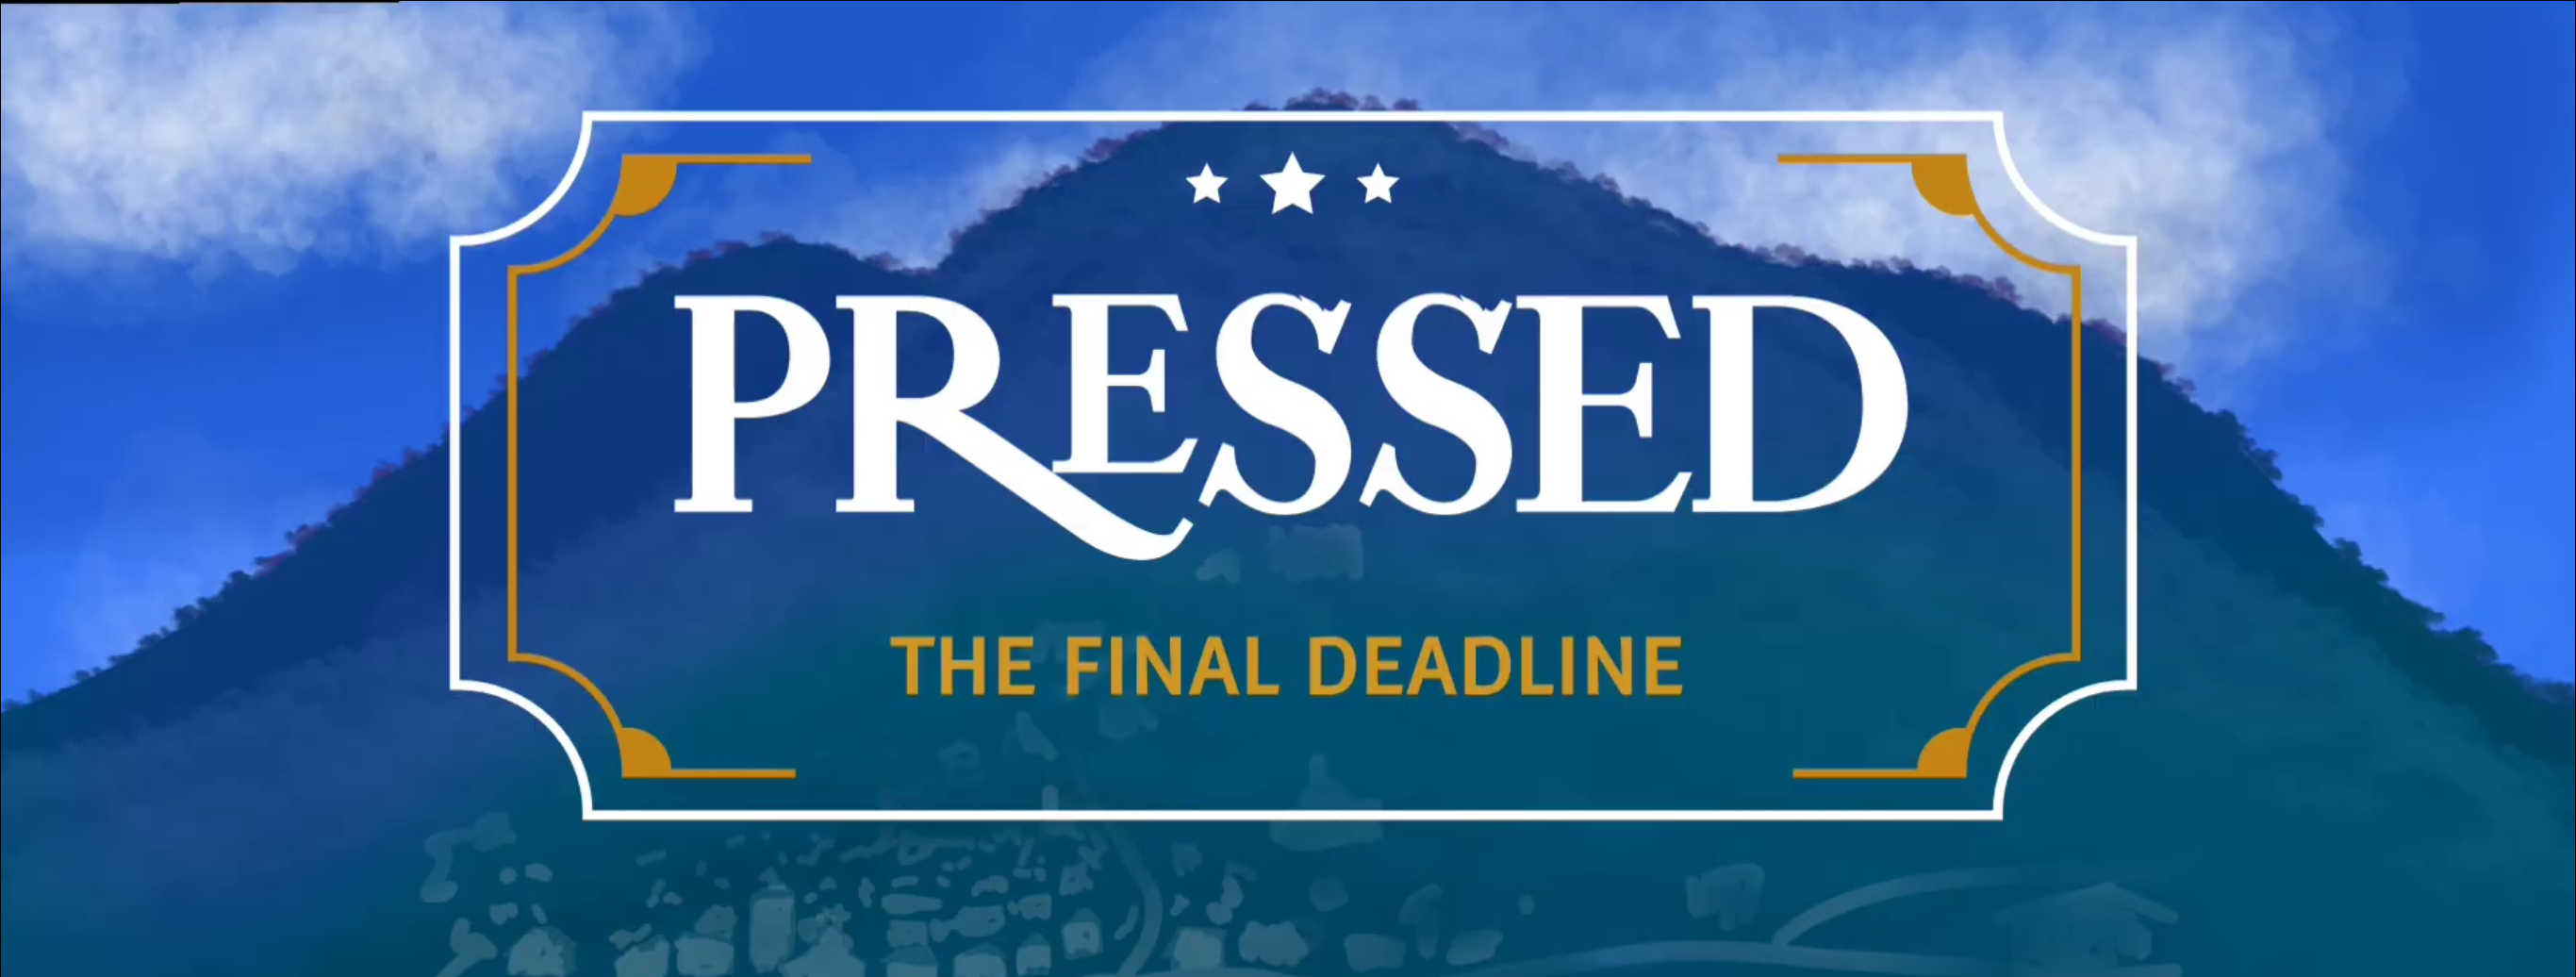 PRESSED: The Final Deadline